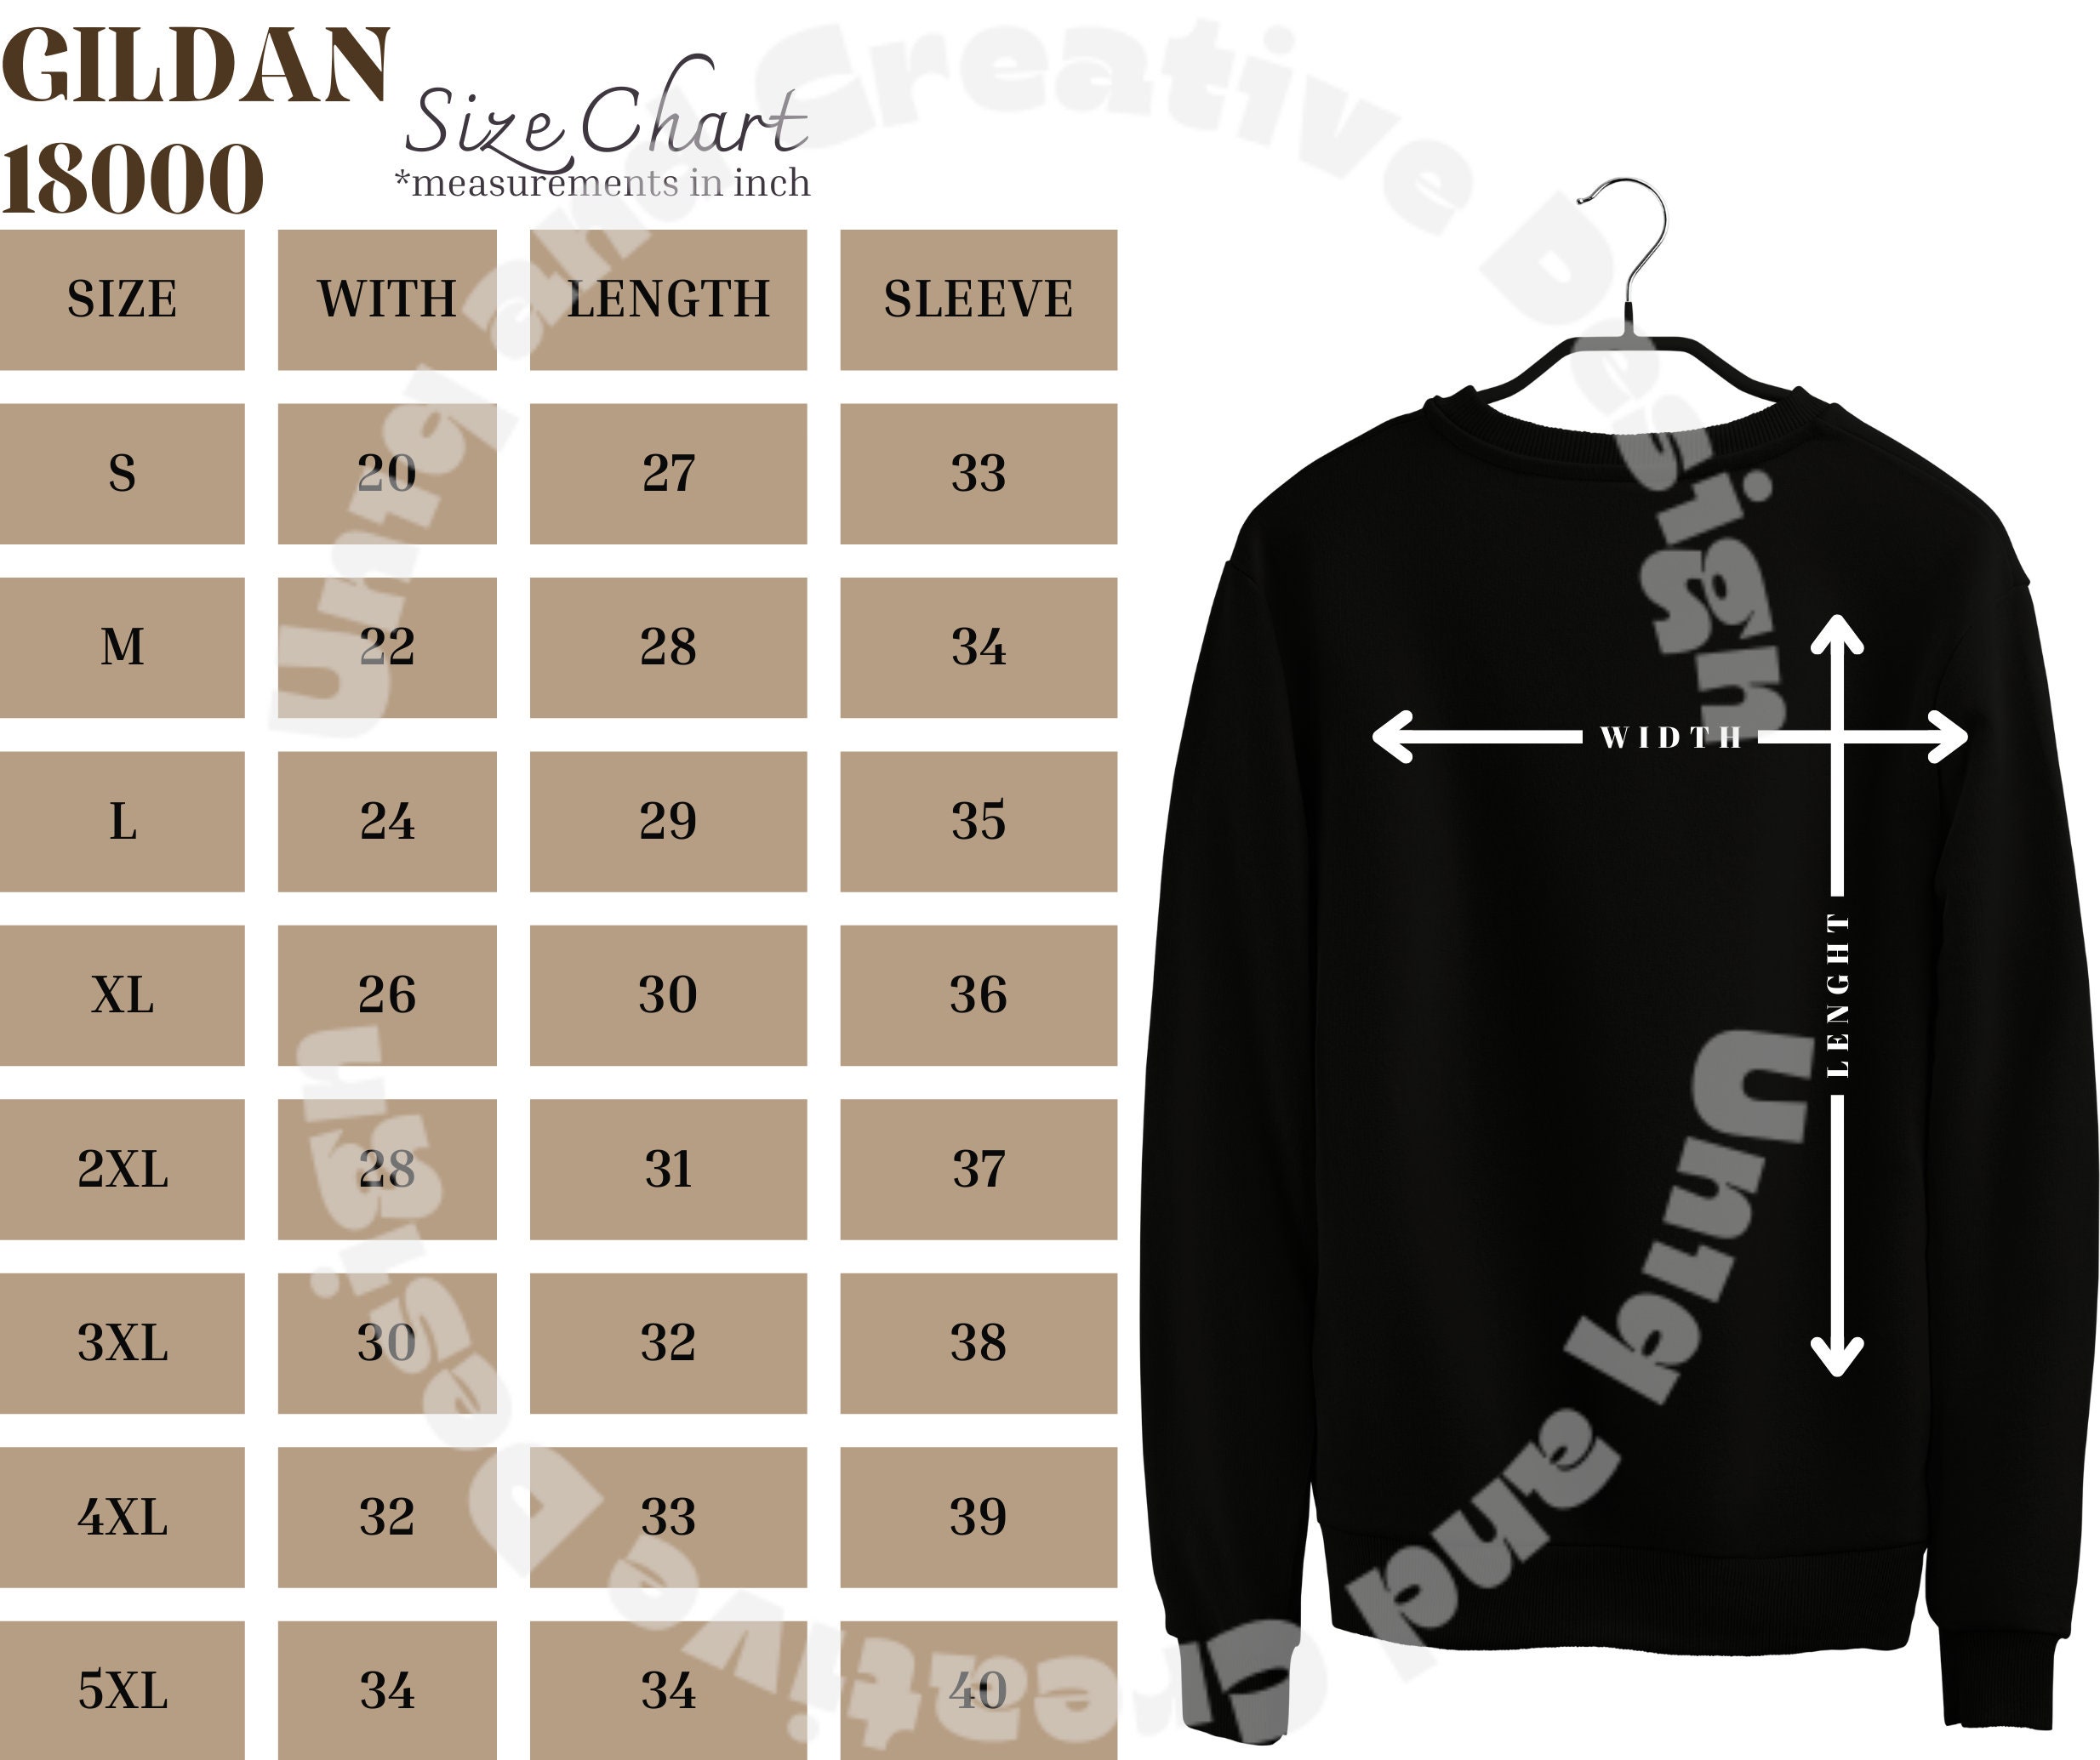 Gildan 18000 Size Chart Hanging Size Chart for Gildan 1800 Mockup Size ...